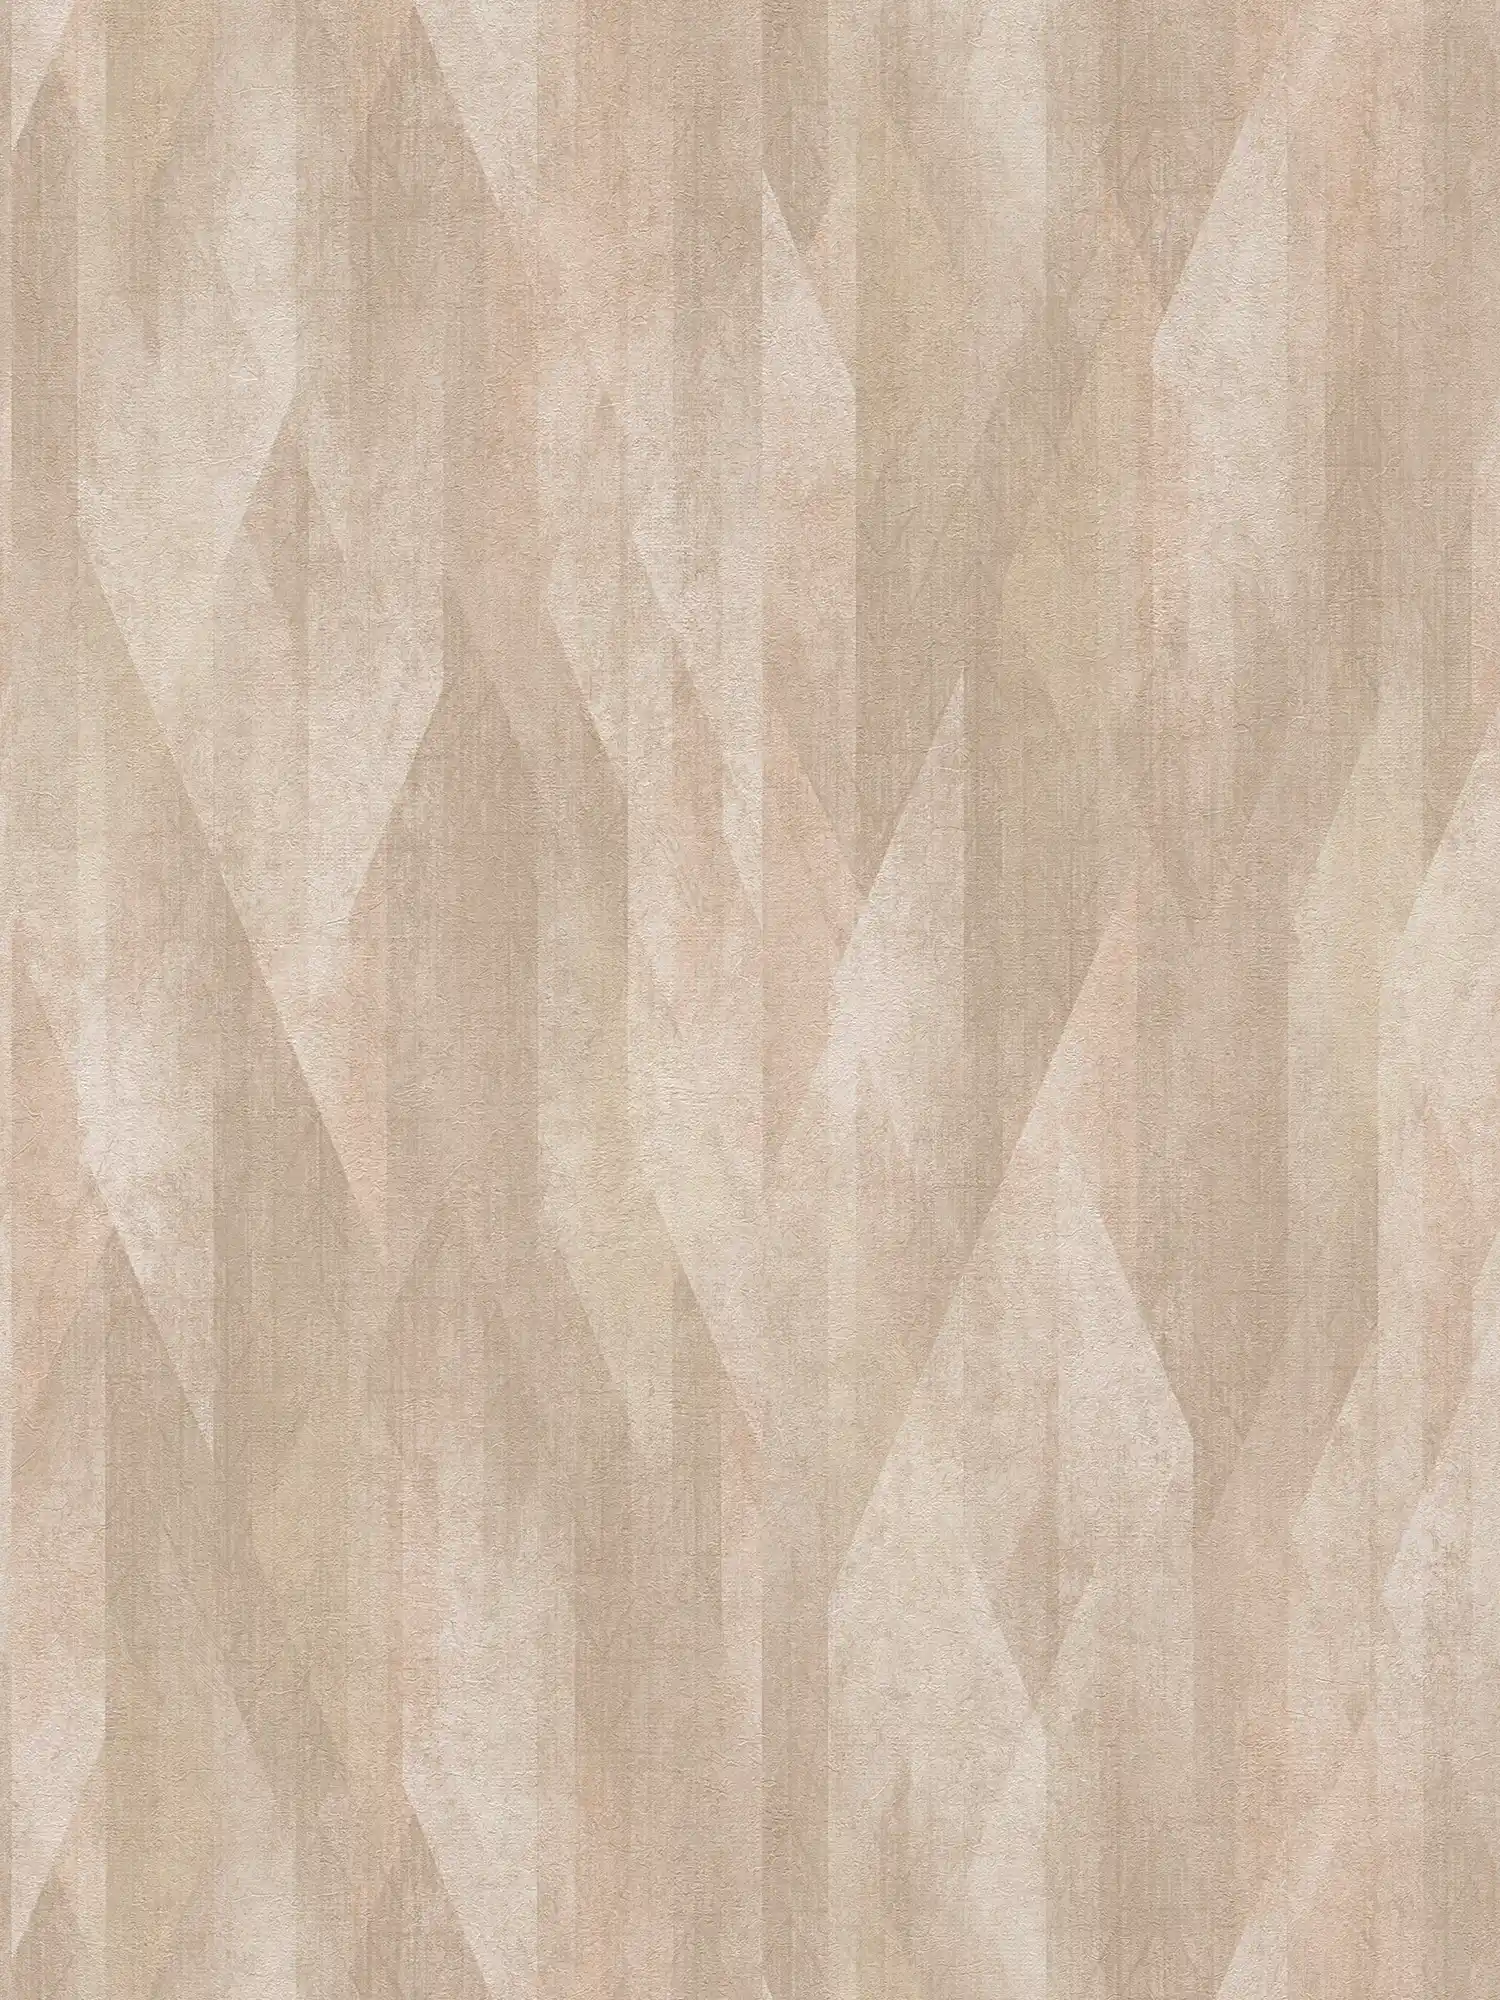 Non-woven wallpaper with graphic diamond design - beige, brown
